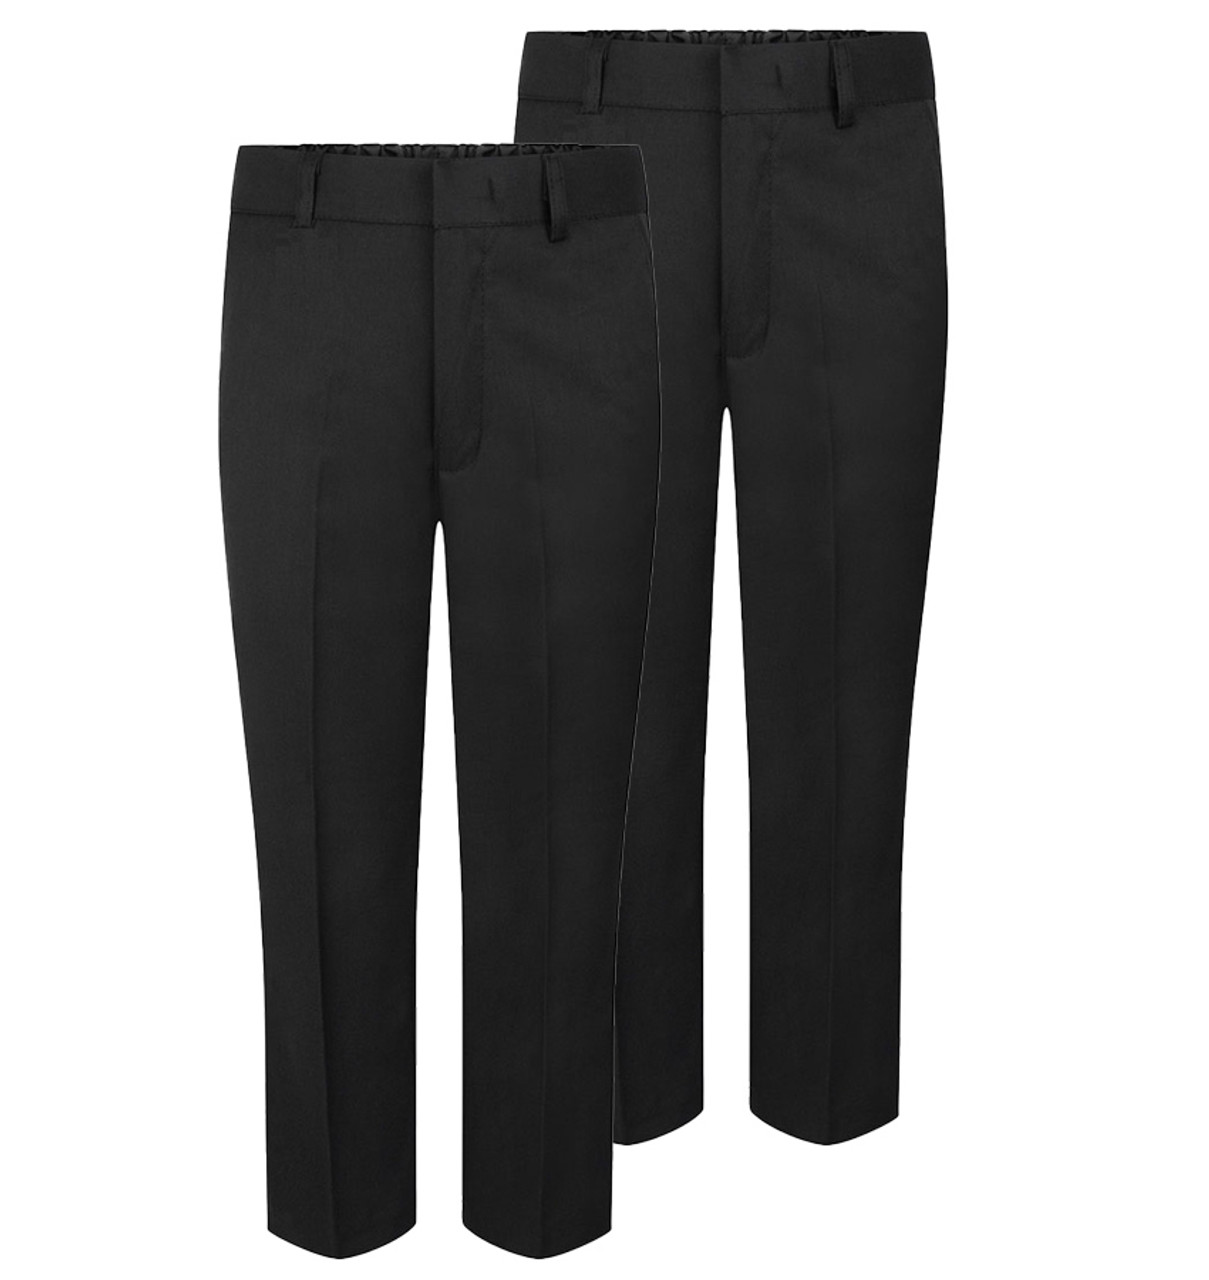 Buy Formal Black Trouser With Black Elastic For Women Online @ Best Prices  in India | Uniform Bucket | UNIFORM BUCKET